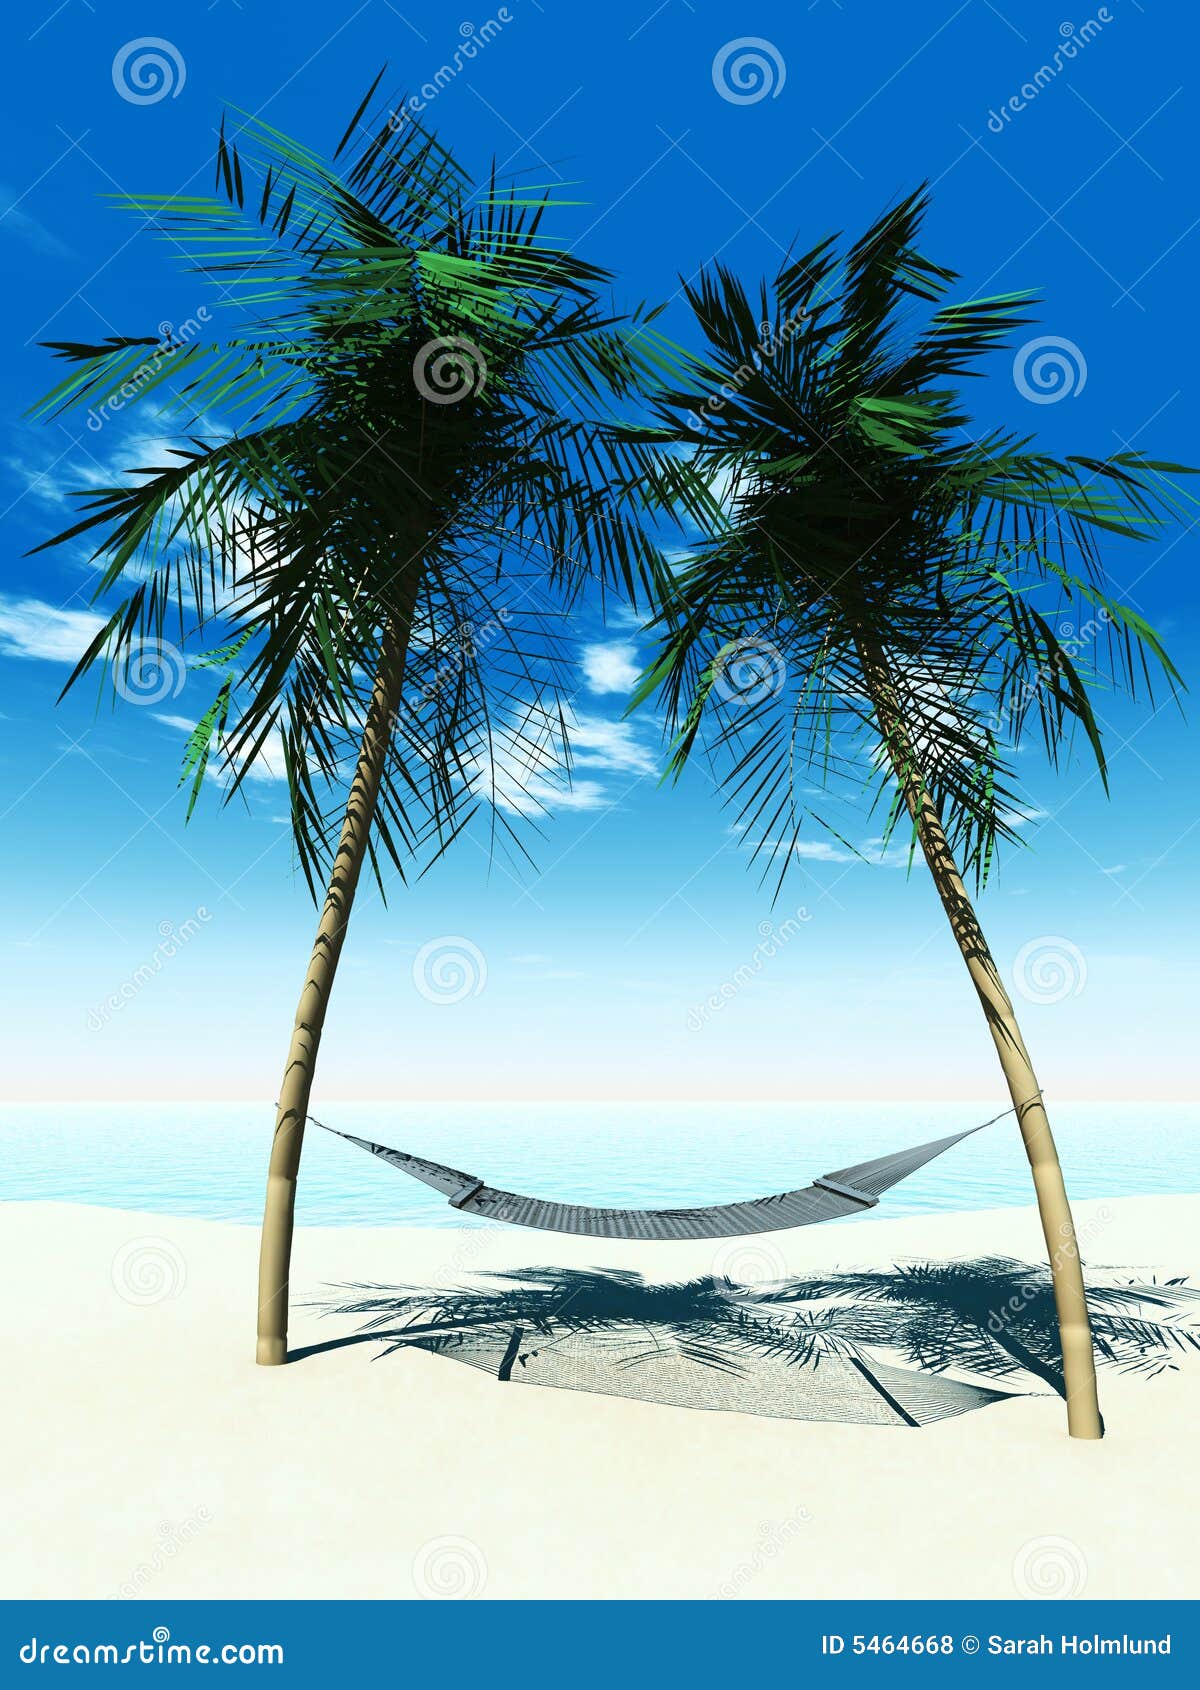 hammock between palmtrees